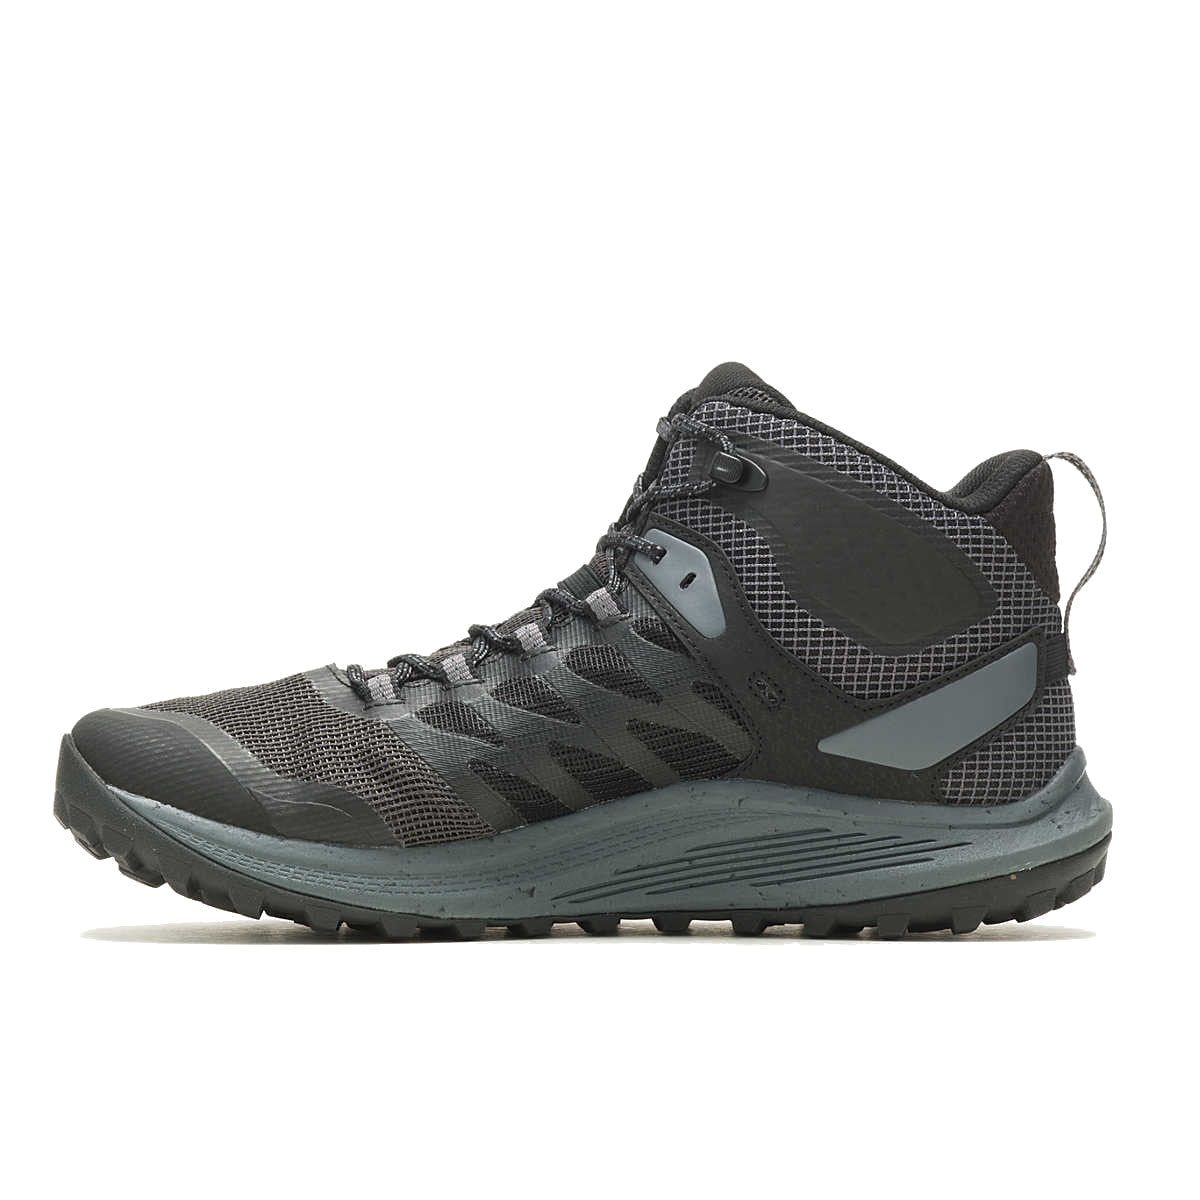 Merrell Men's Nova 3 Mid WATERPROOF Hiking Boots - Black